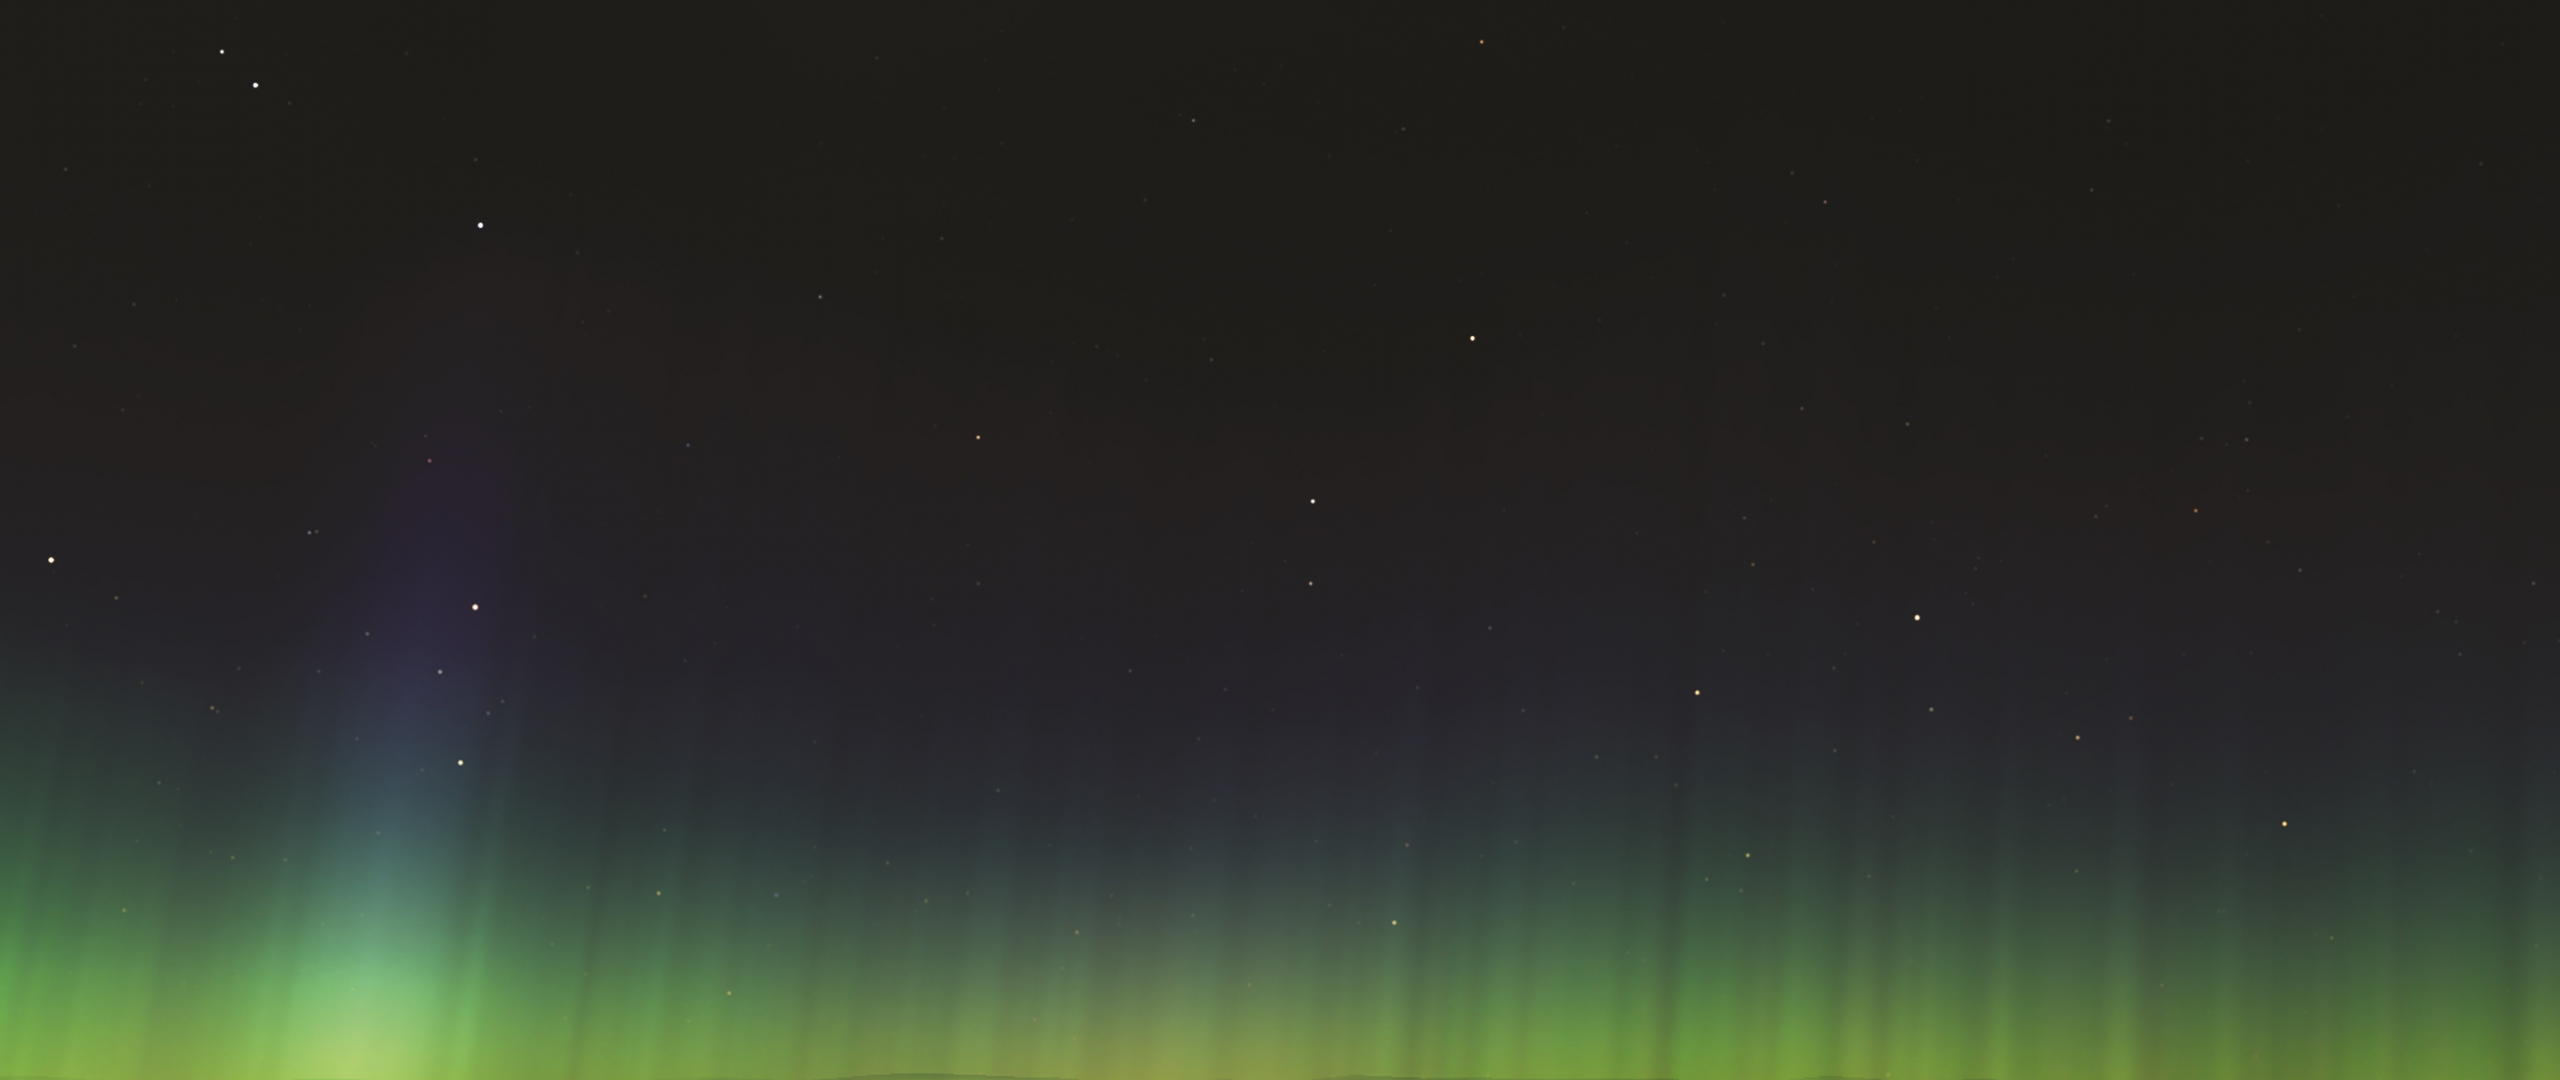 Download wallpaper 2560x1080 northern lights, green sky, night, dual ...